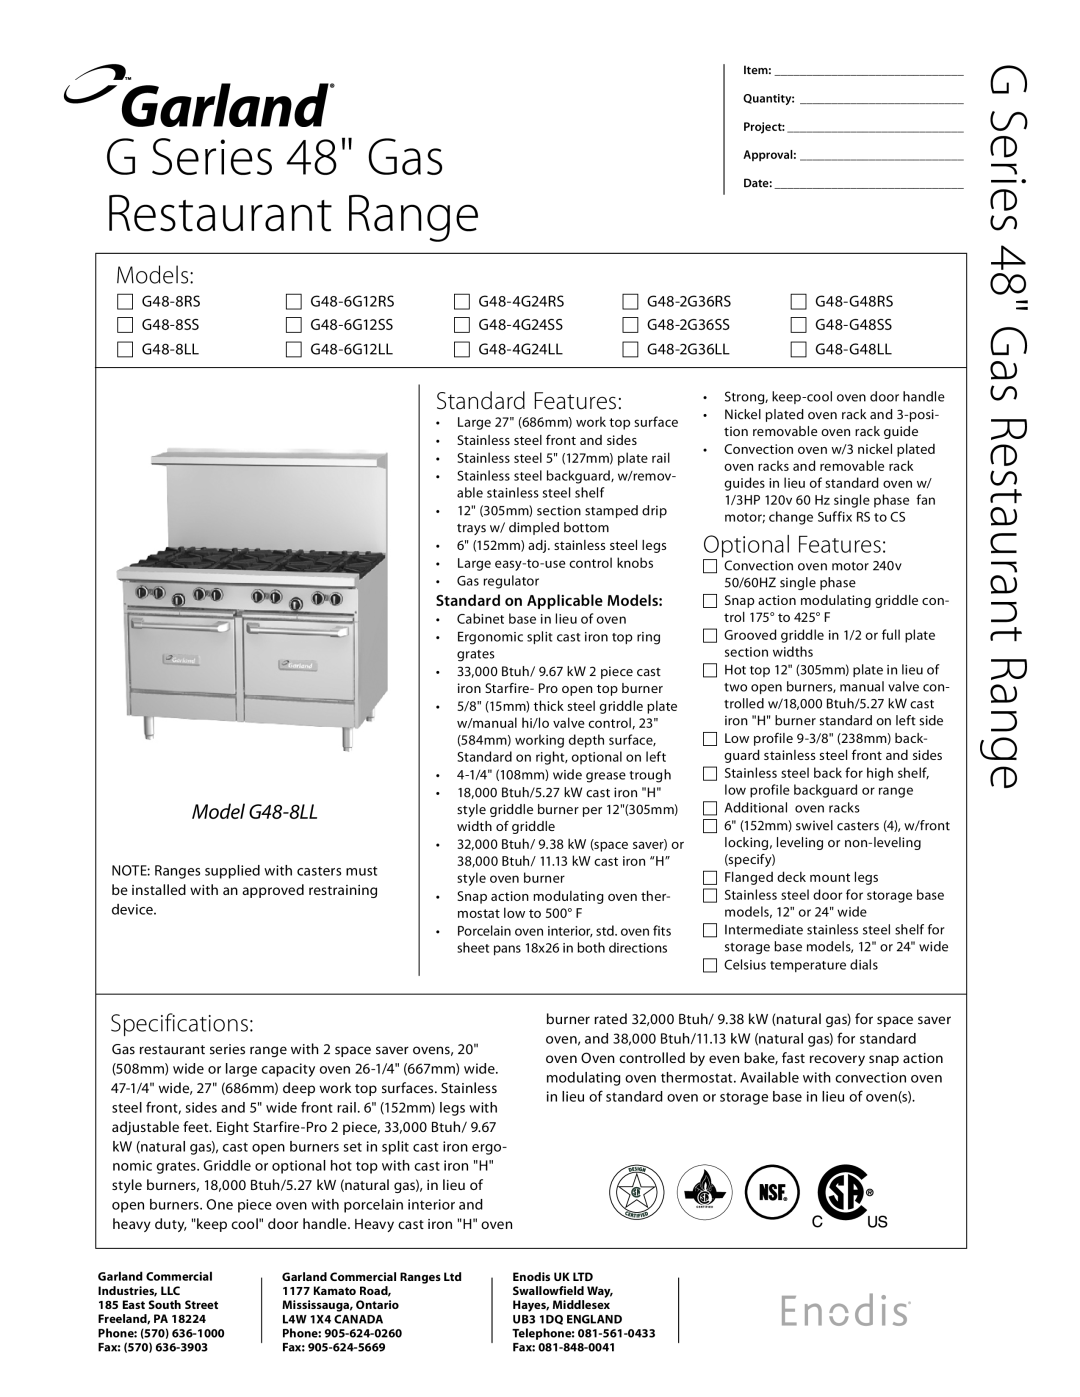 Garland G48-2G36SS, G48-8LL specifications Restaurant Range, G Series 48 Gas, Models, Standard Features, Optional Features 